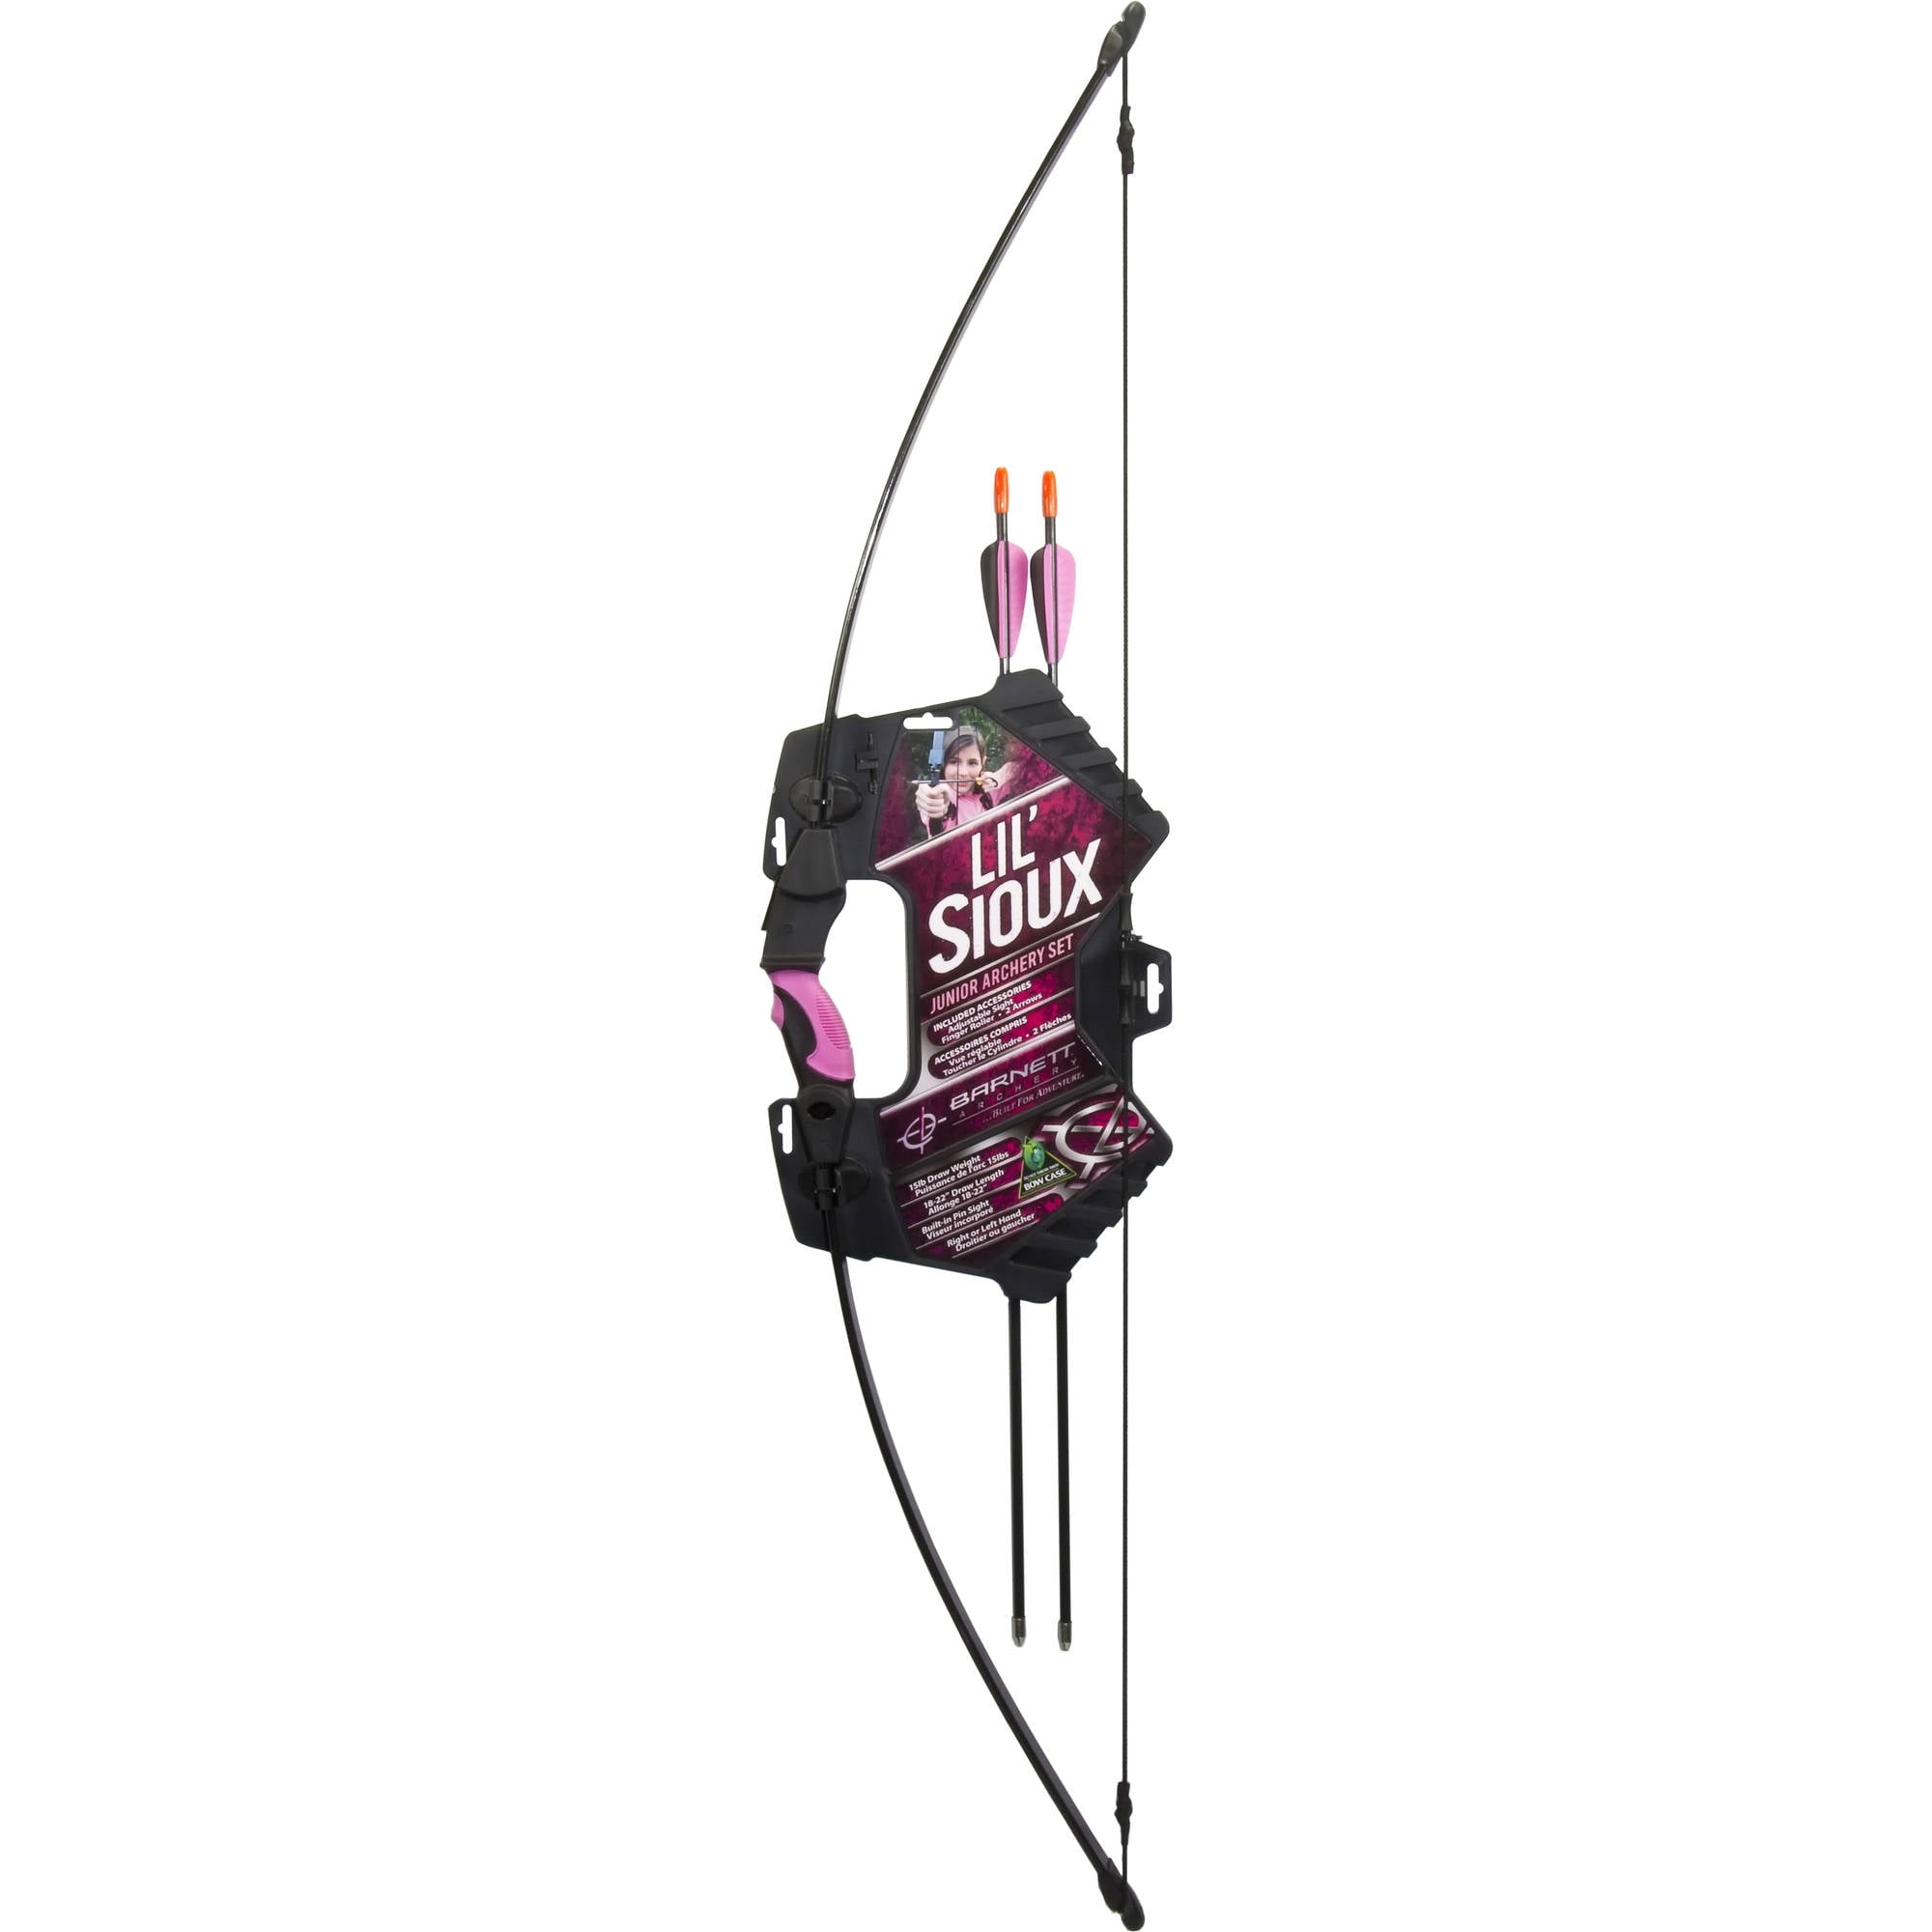 pink archery bow case